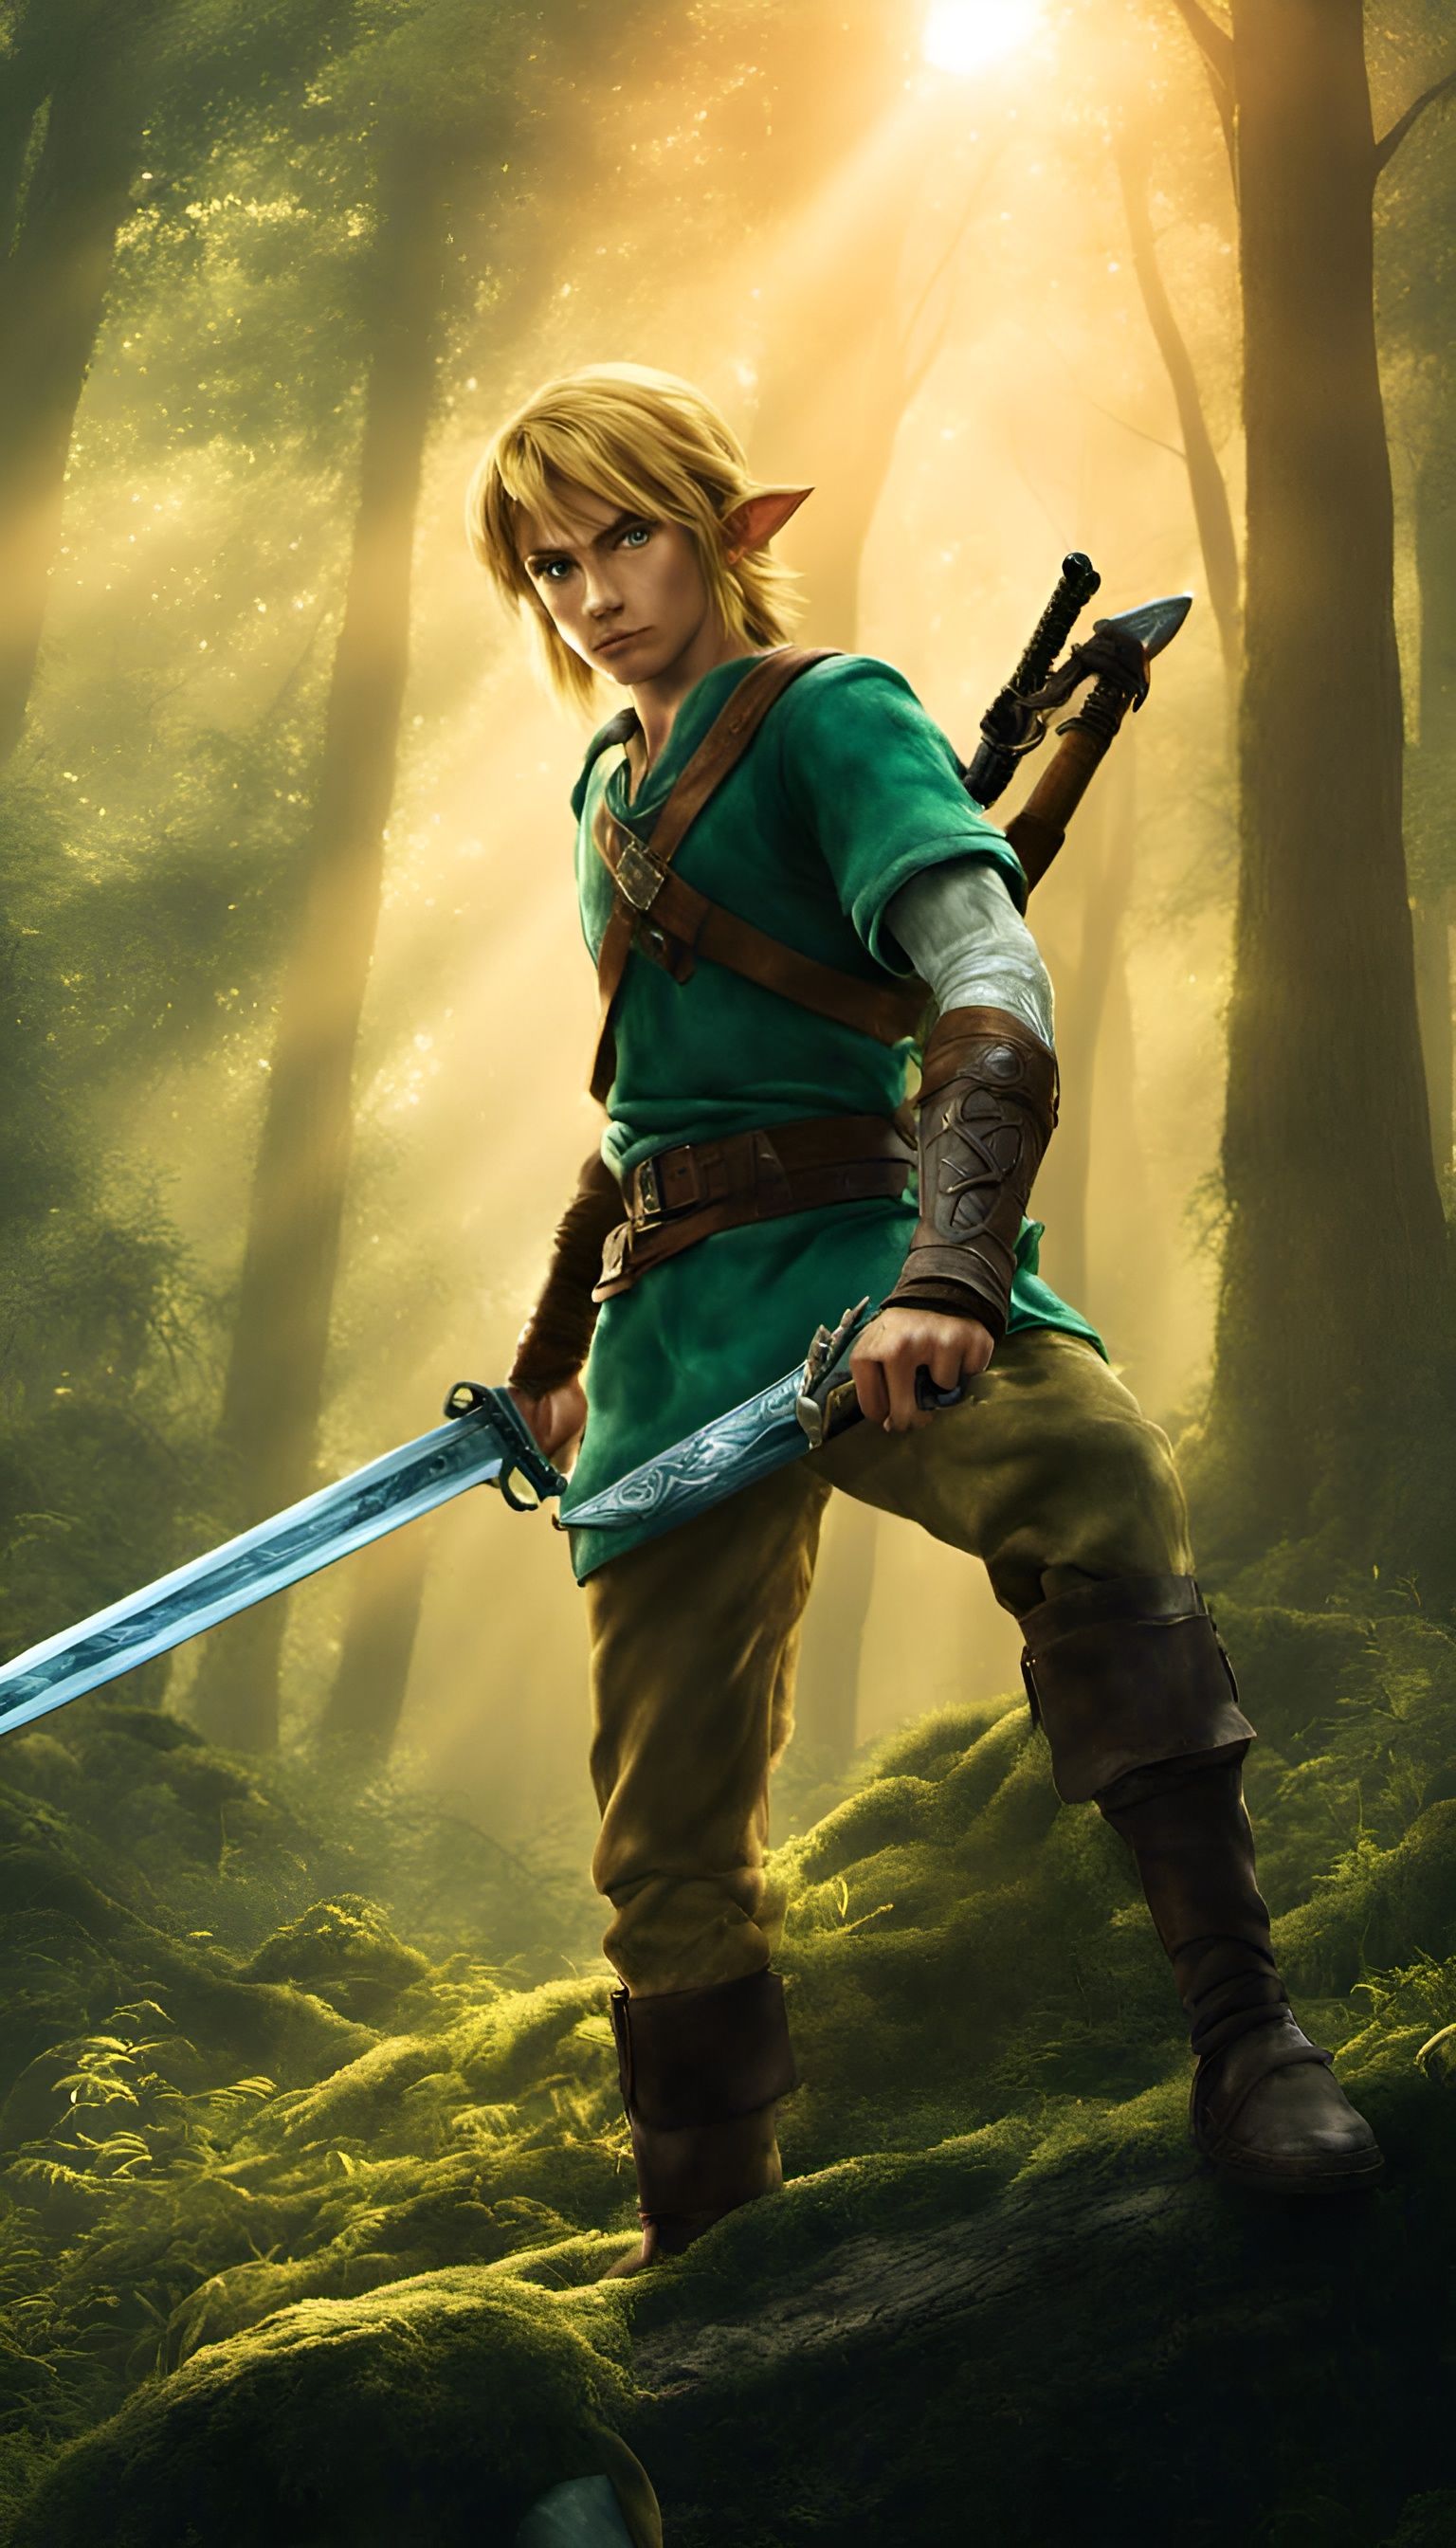 Wallpaper look, elf, sword, fairy, guy, The Legend of Zelda, Link for  mobile and desktop, section игры, resolution 1994x1080 - download